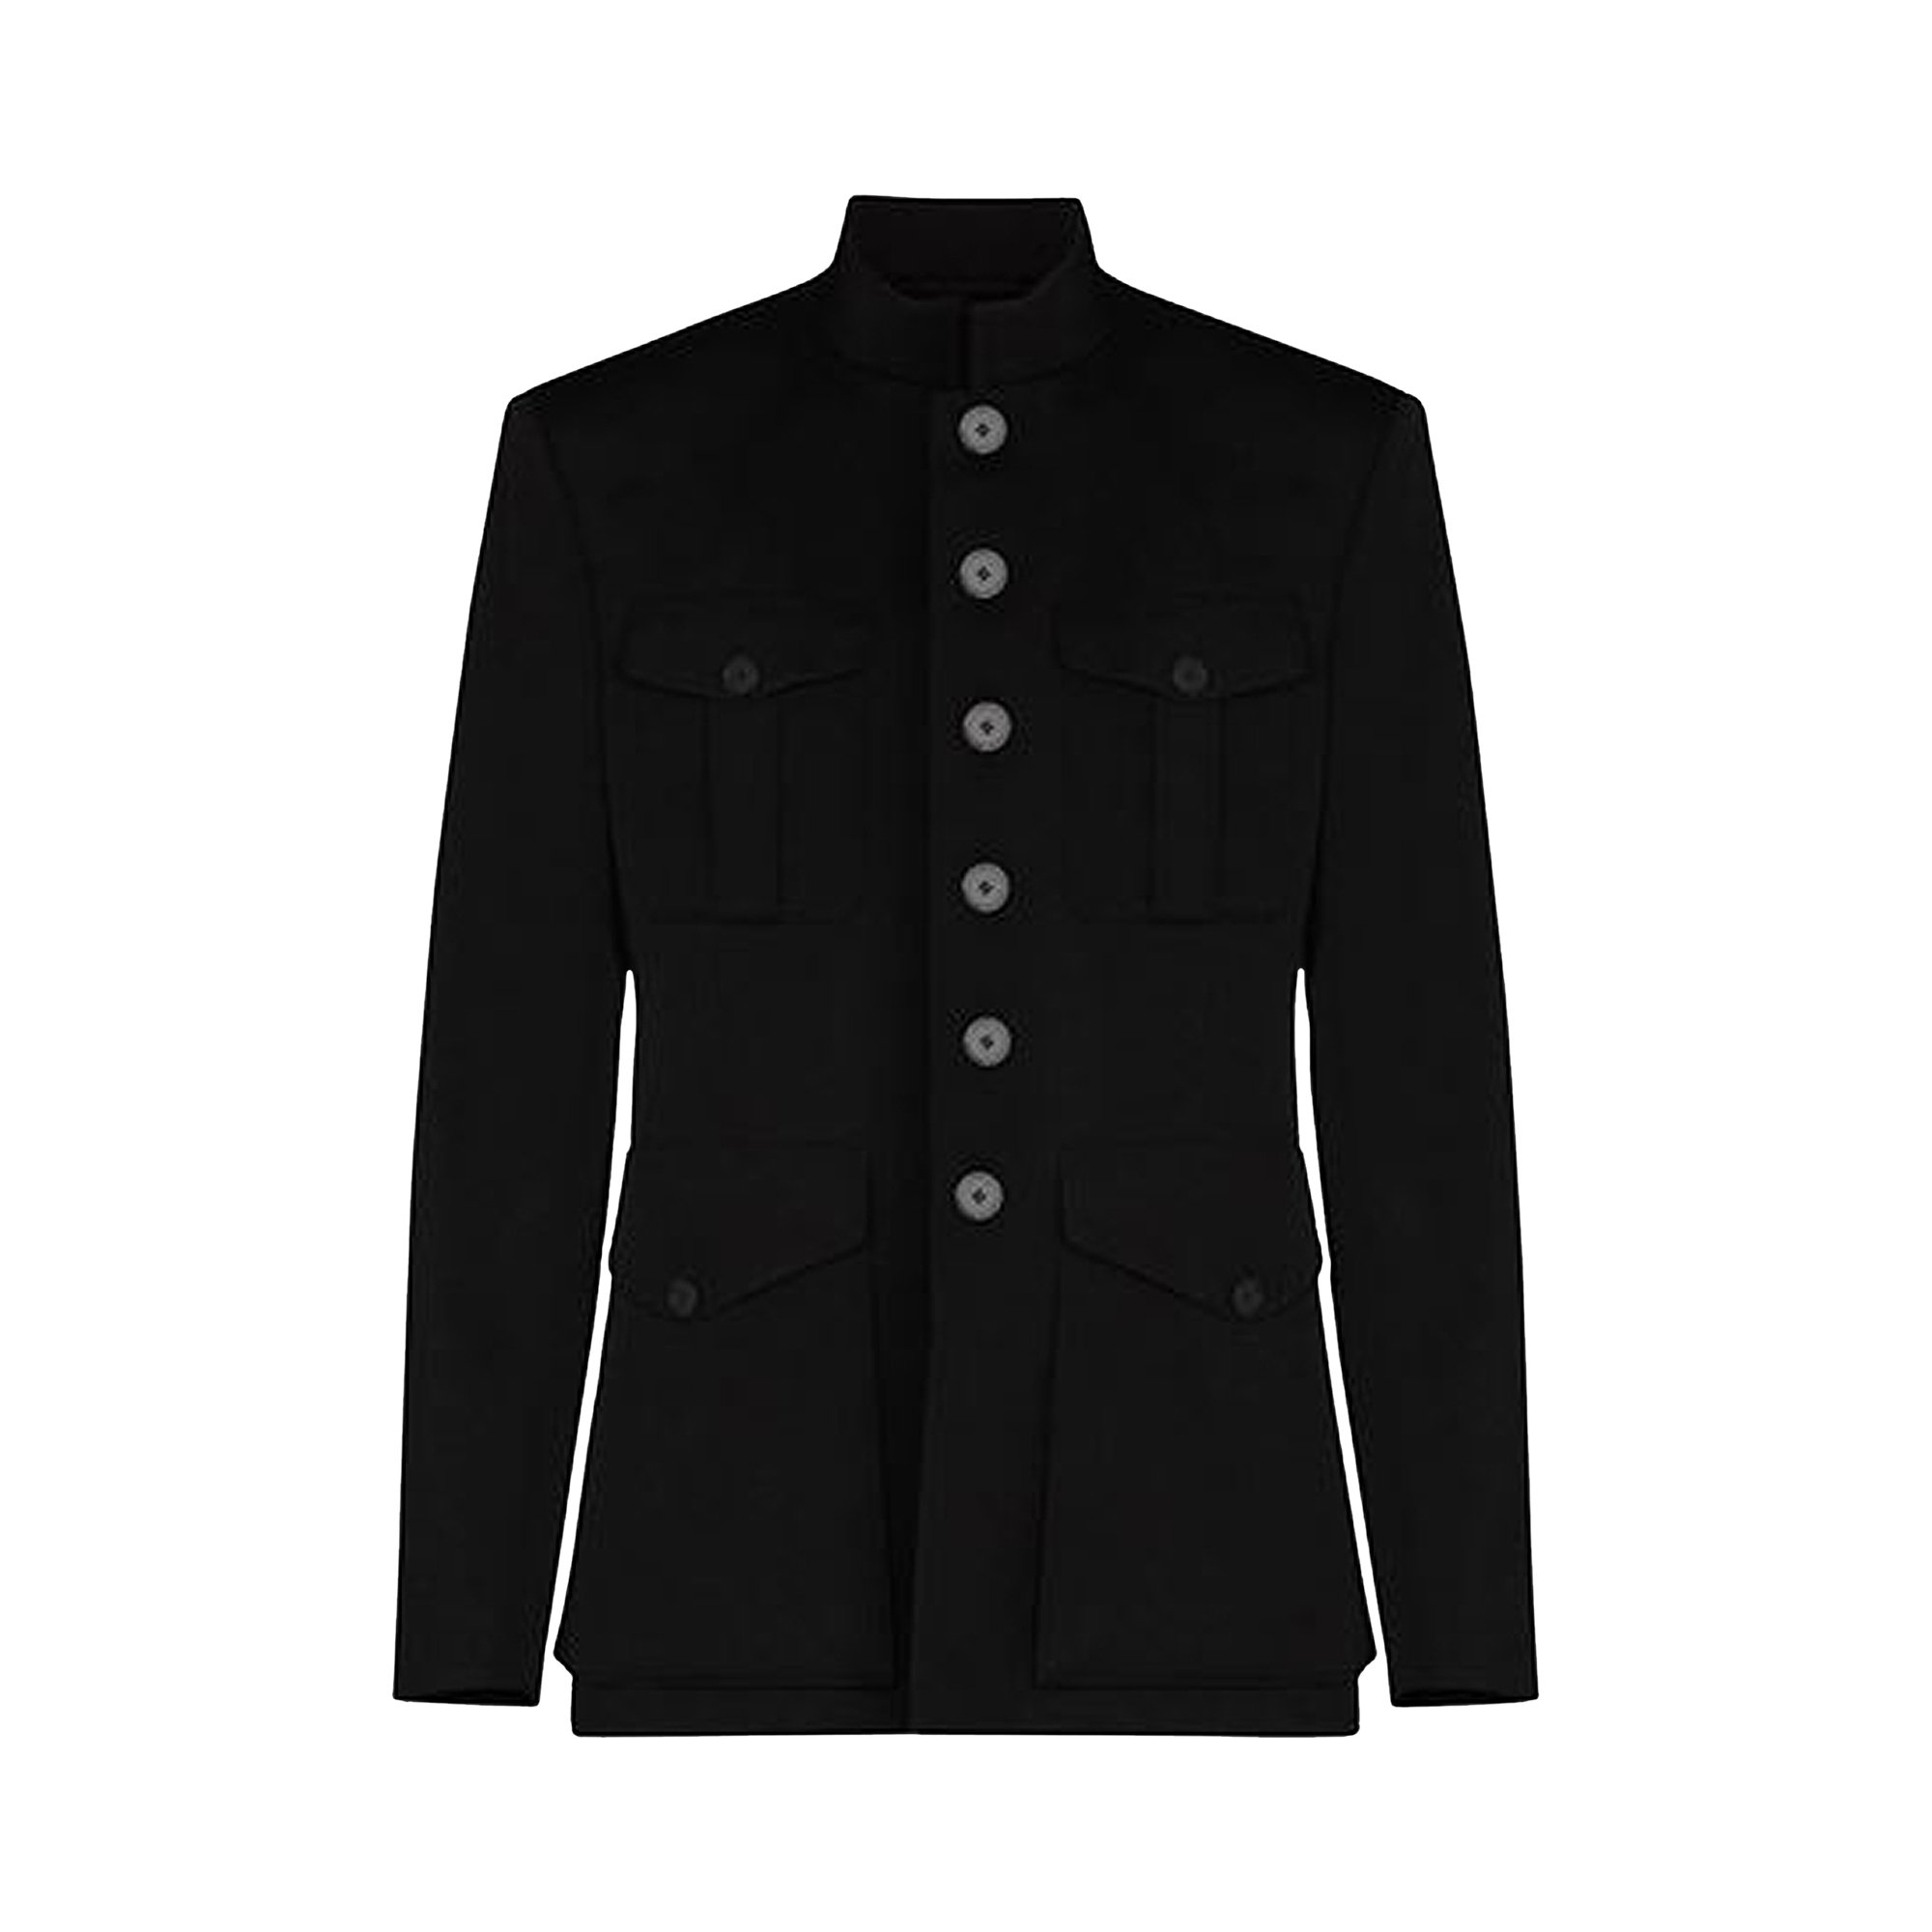 Buy Balenciaga Military Tailored Jacket 'Black' - 642240 TJT24 